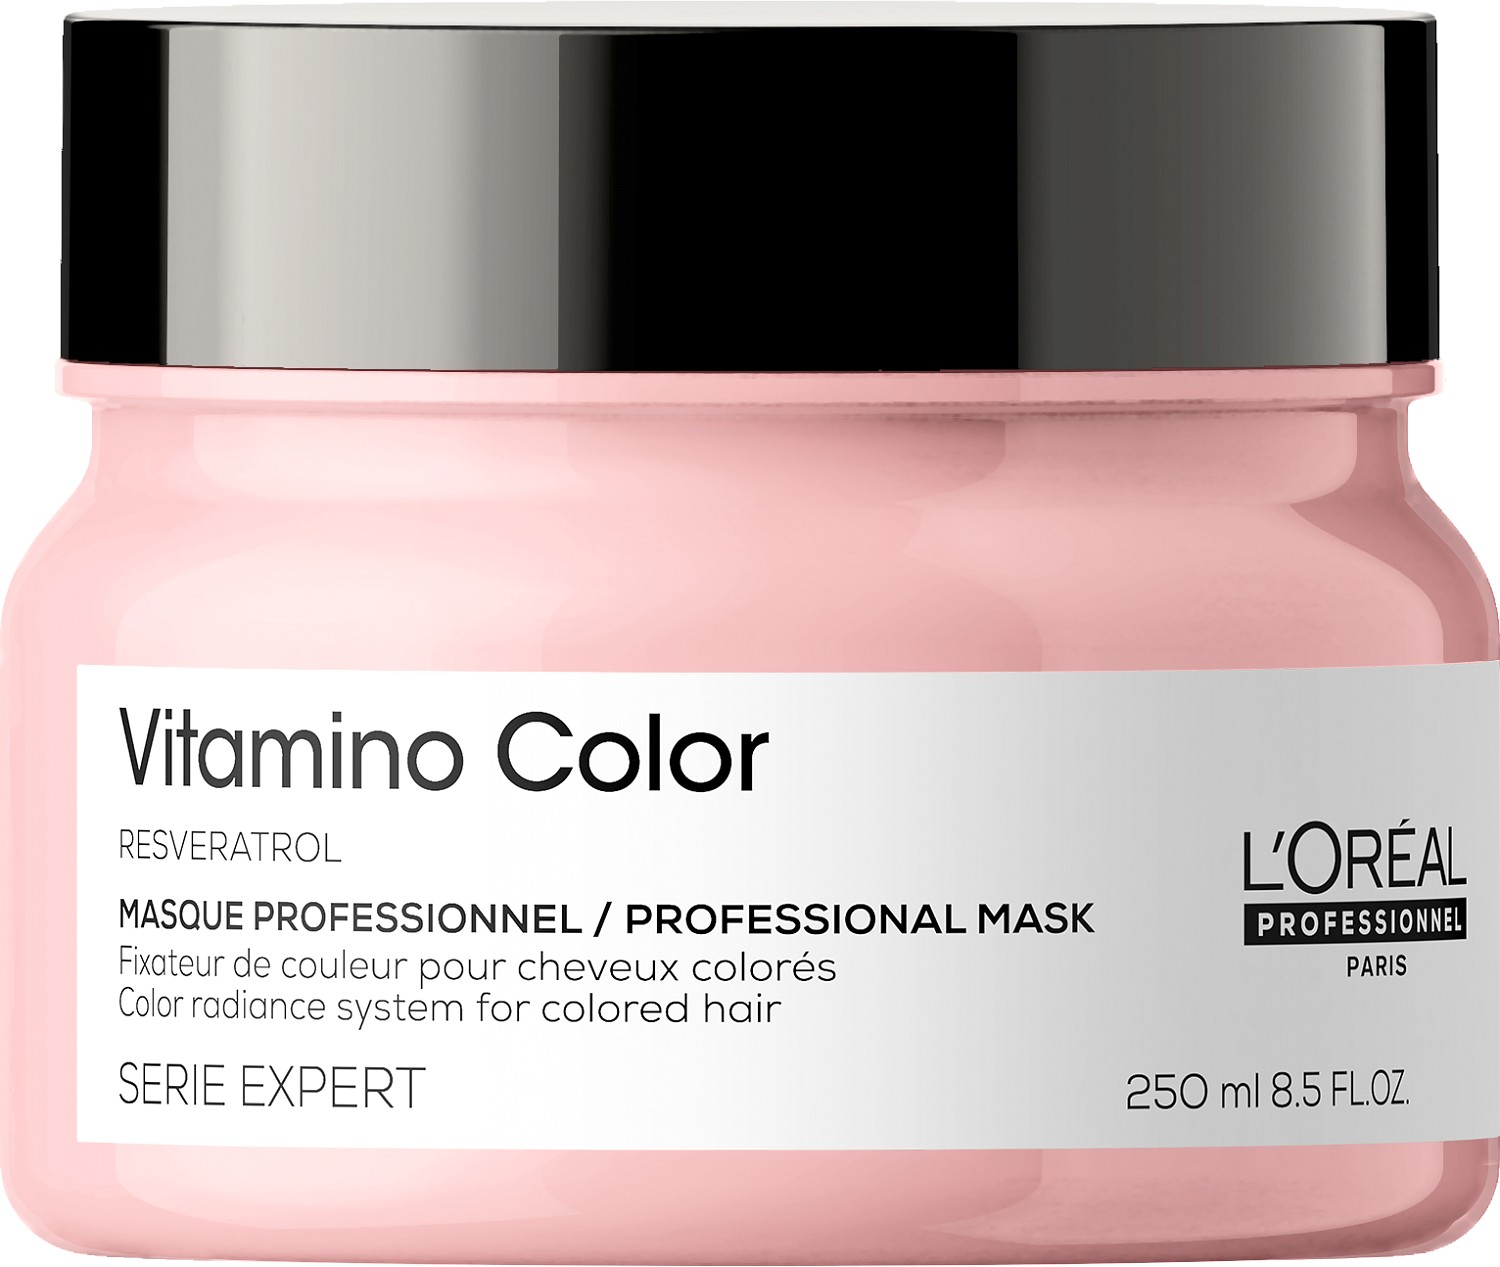  Loreal Vitamino Color Resveratrol Masque 250 ml 